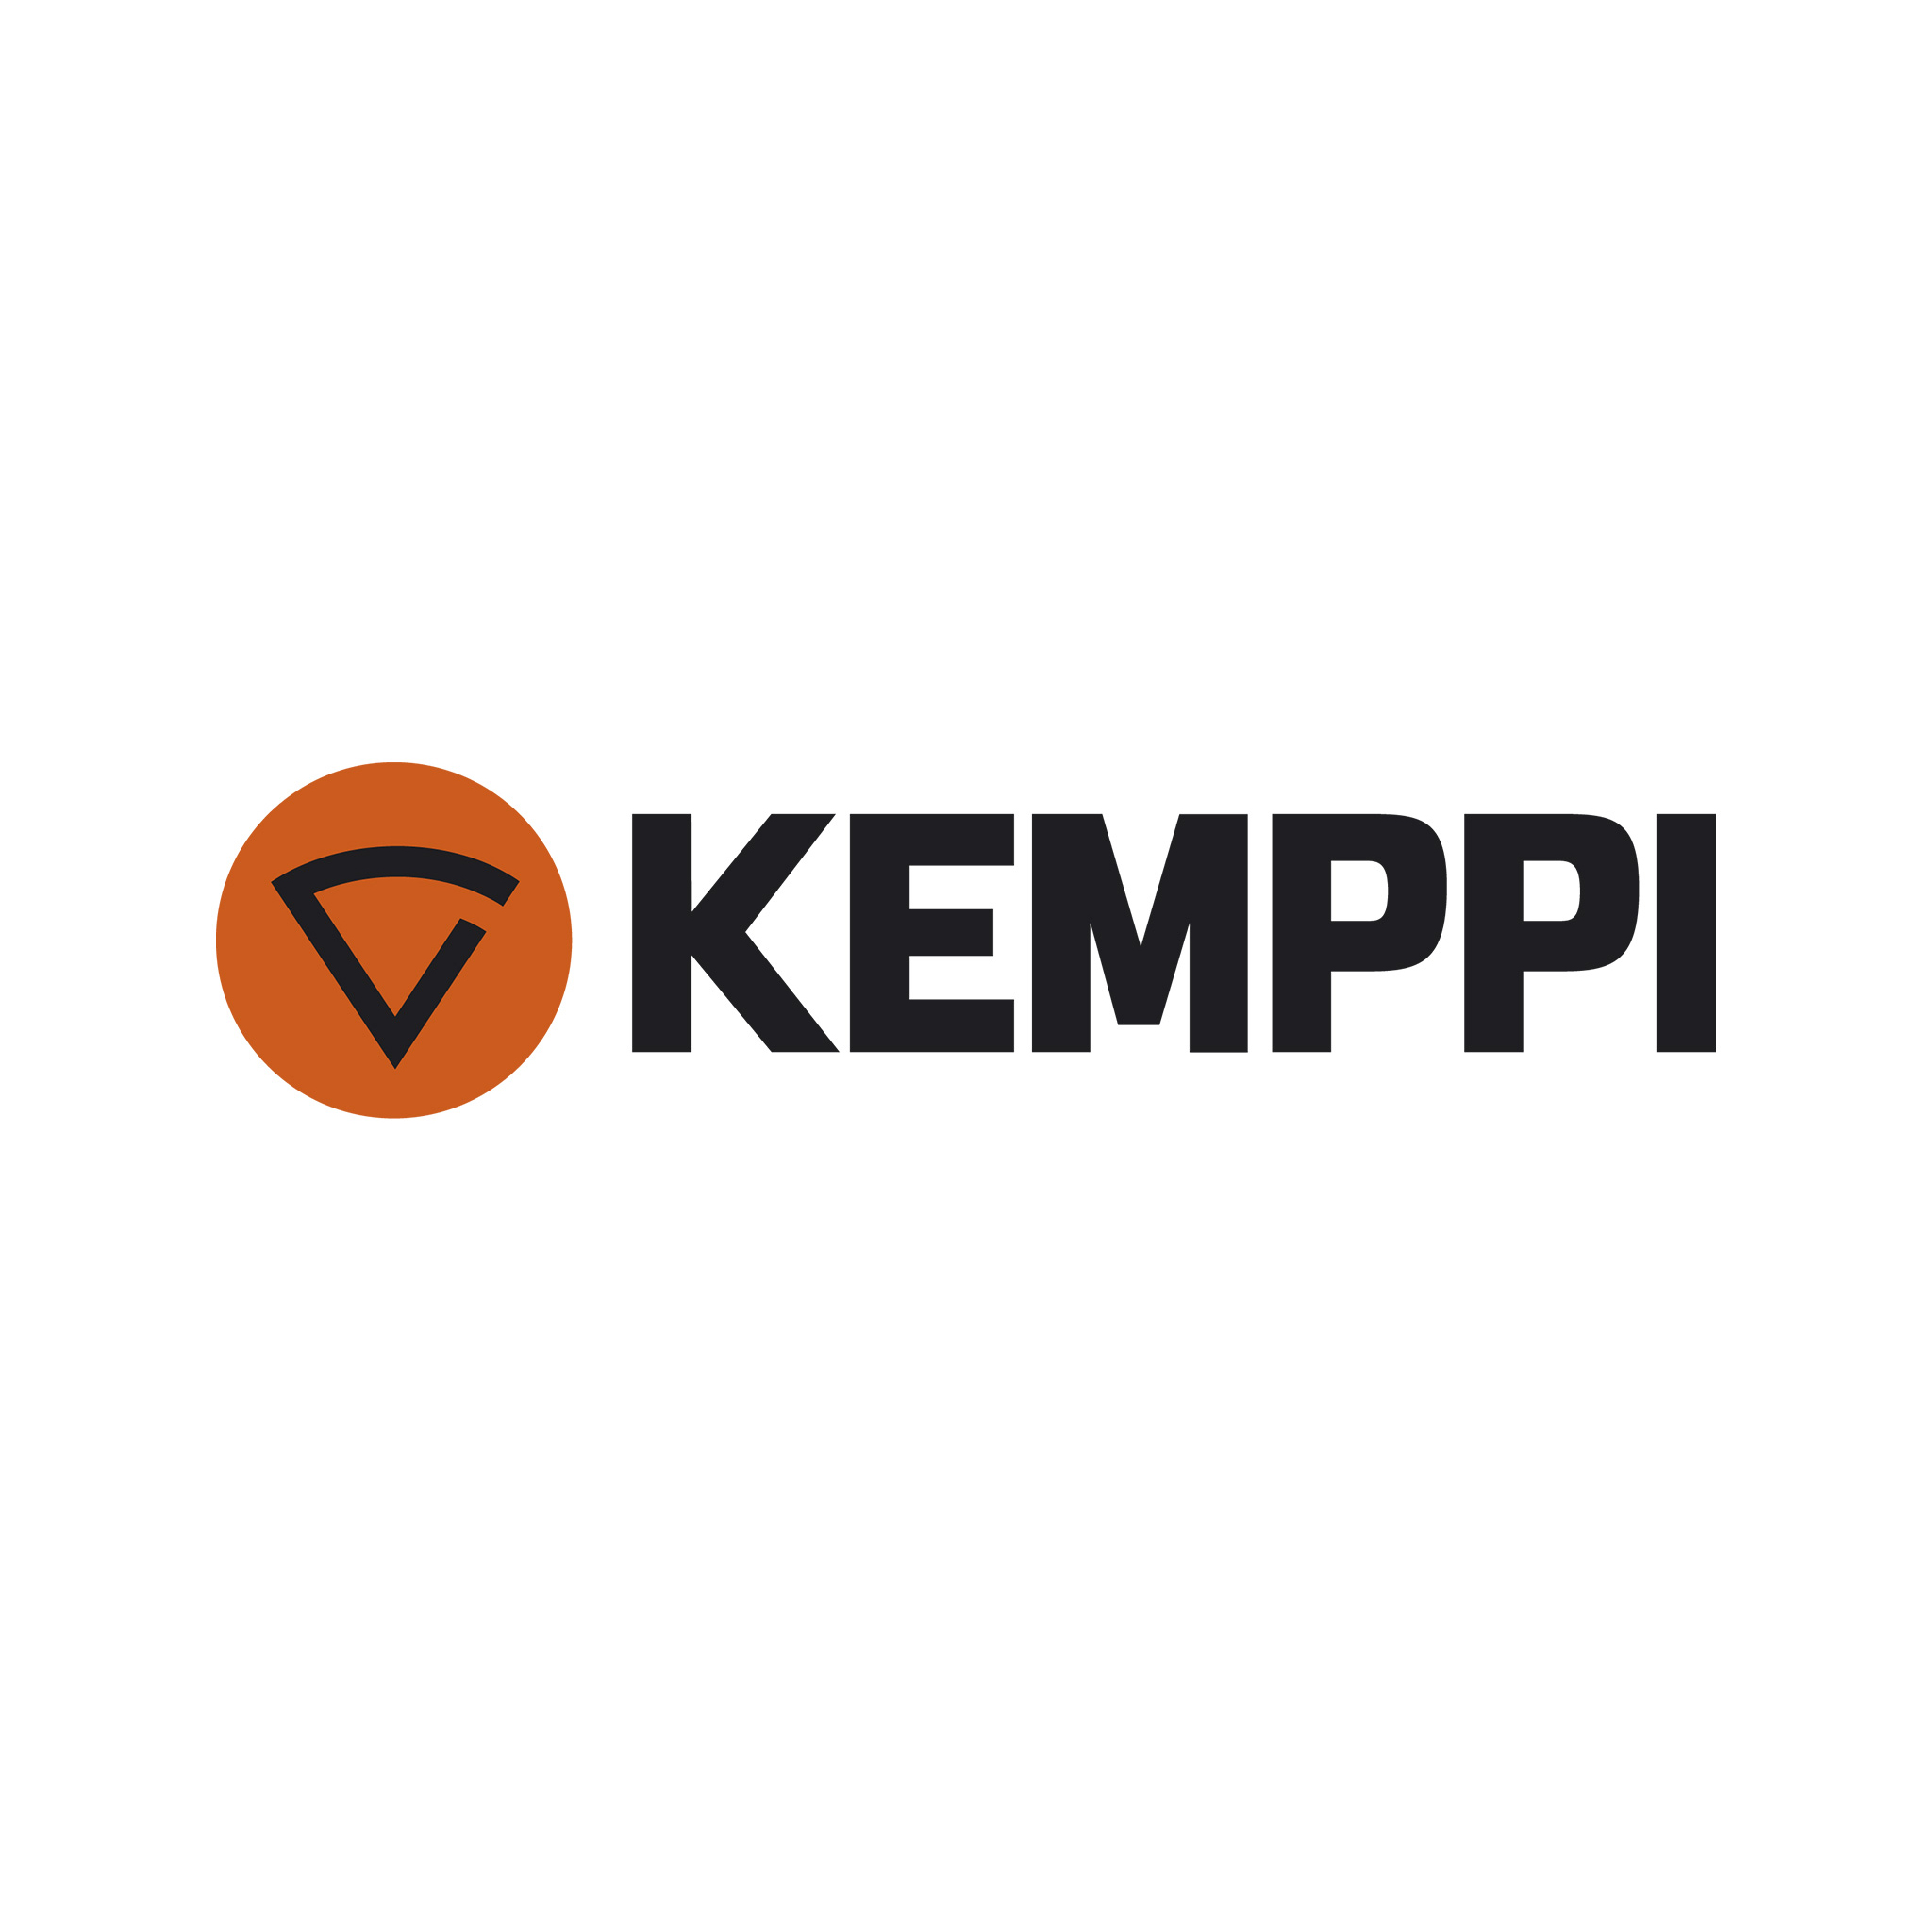 Kempppi Premiumhändler